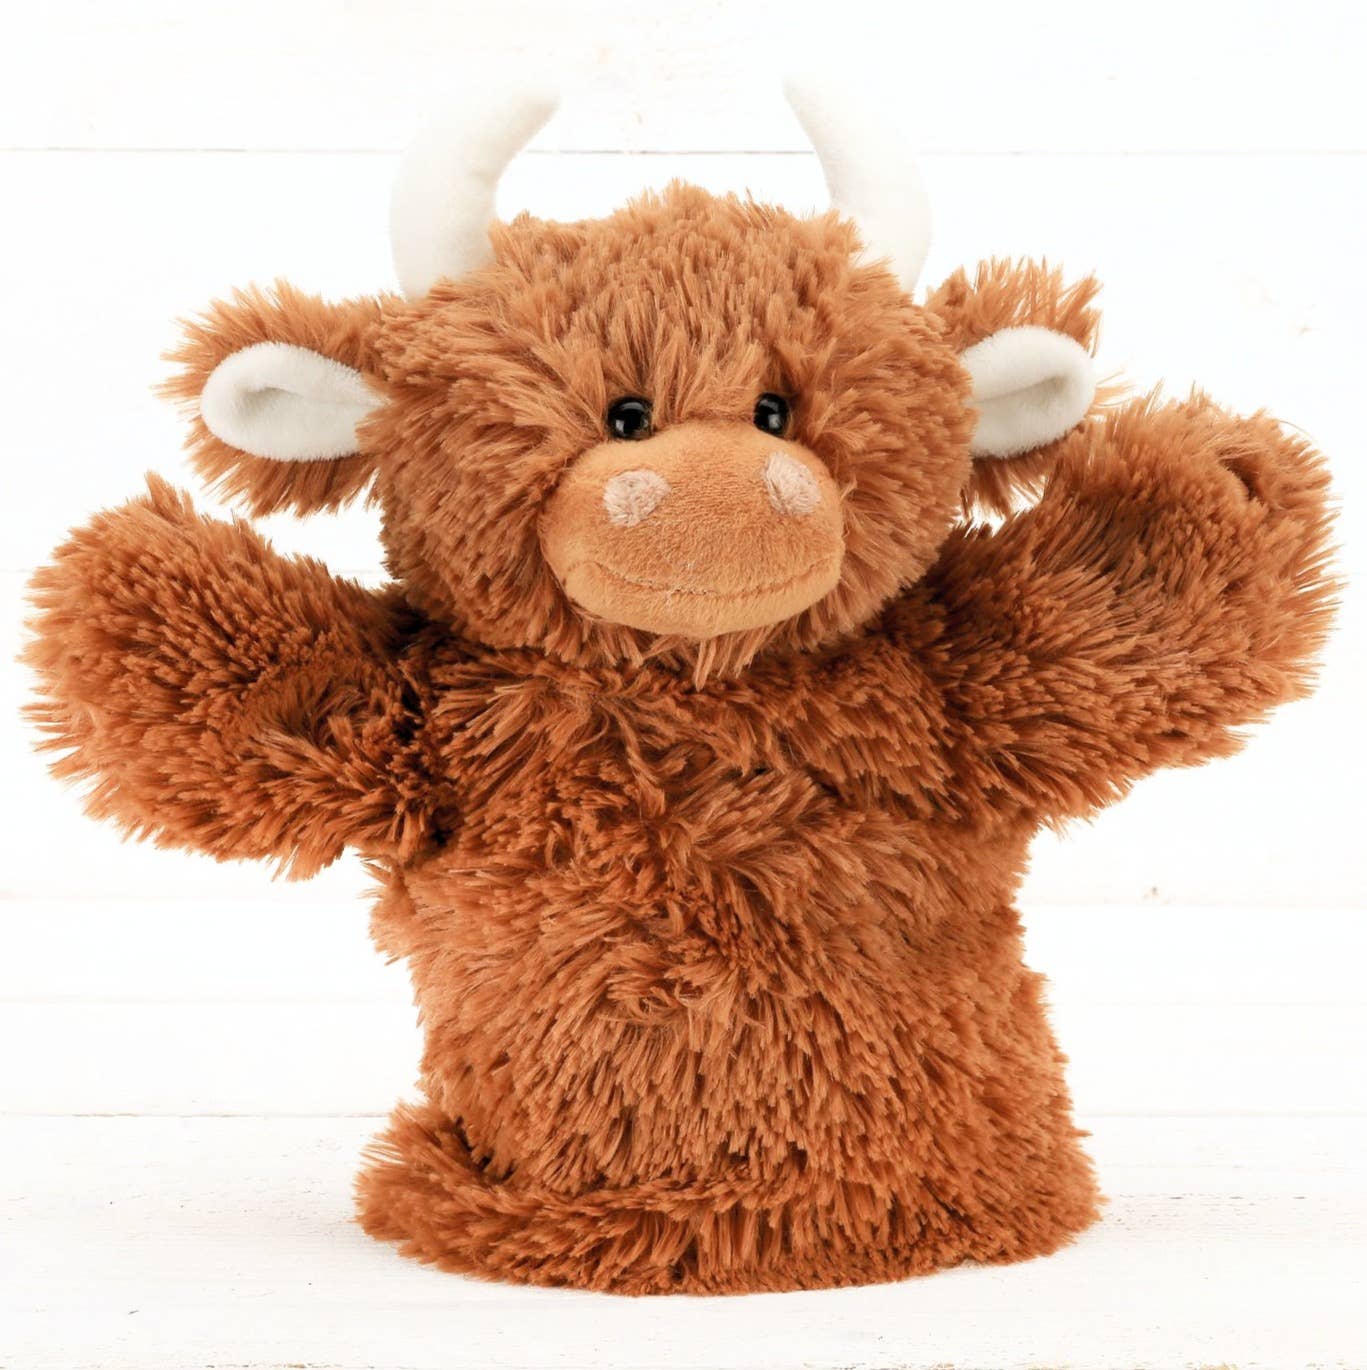 Stuffed Animals Scottish Highland Cow Super Soft Toy - Plush Hand Puppet - Brown JO-MRT30233